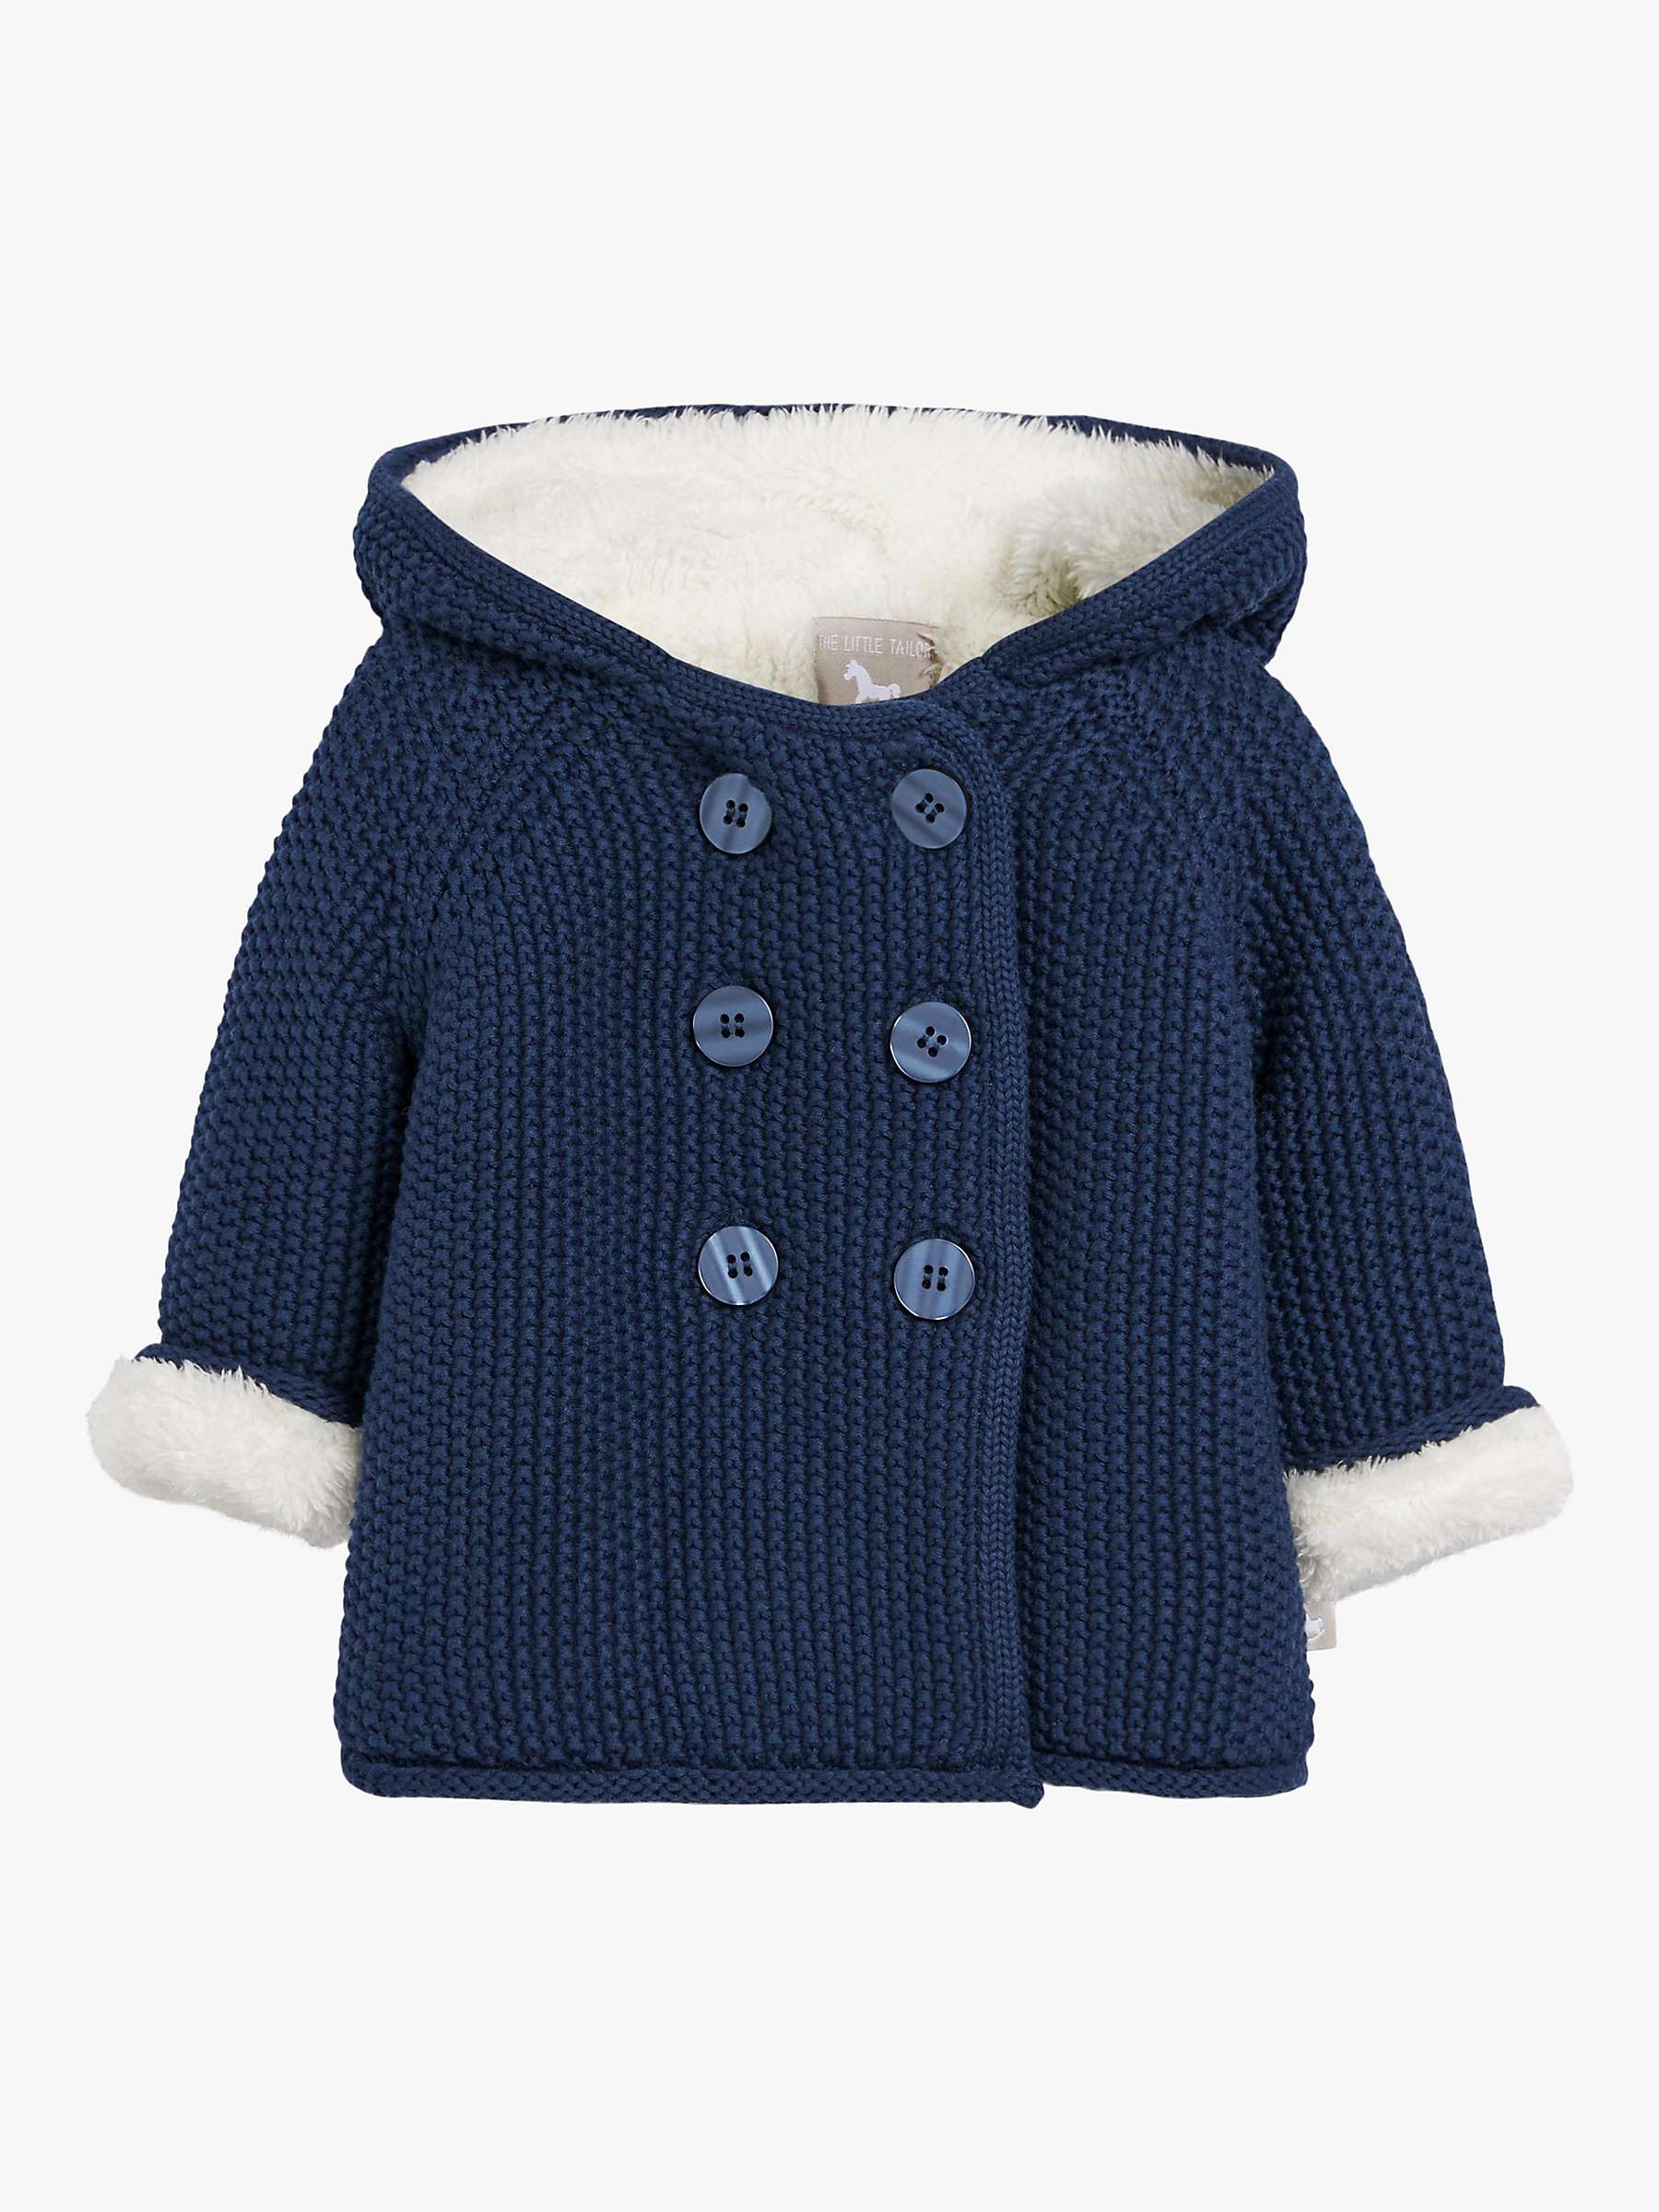 Buy The Little Tailor Kids' Knitted Pram Jacket Online at johnlewis.com